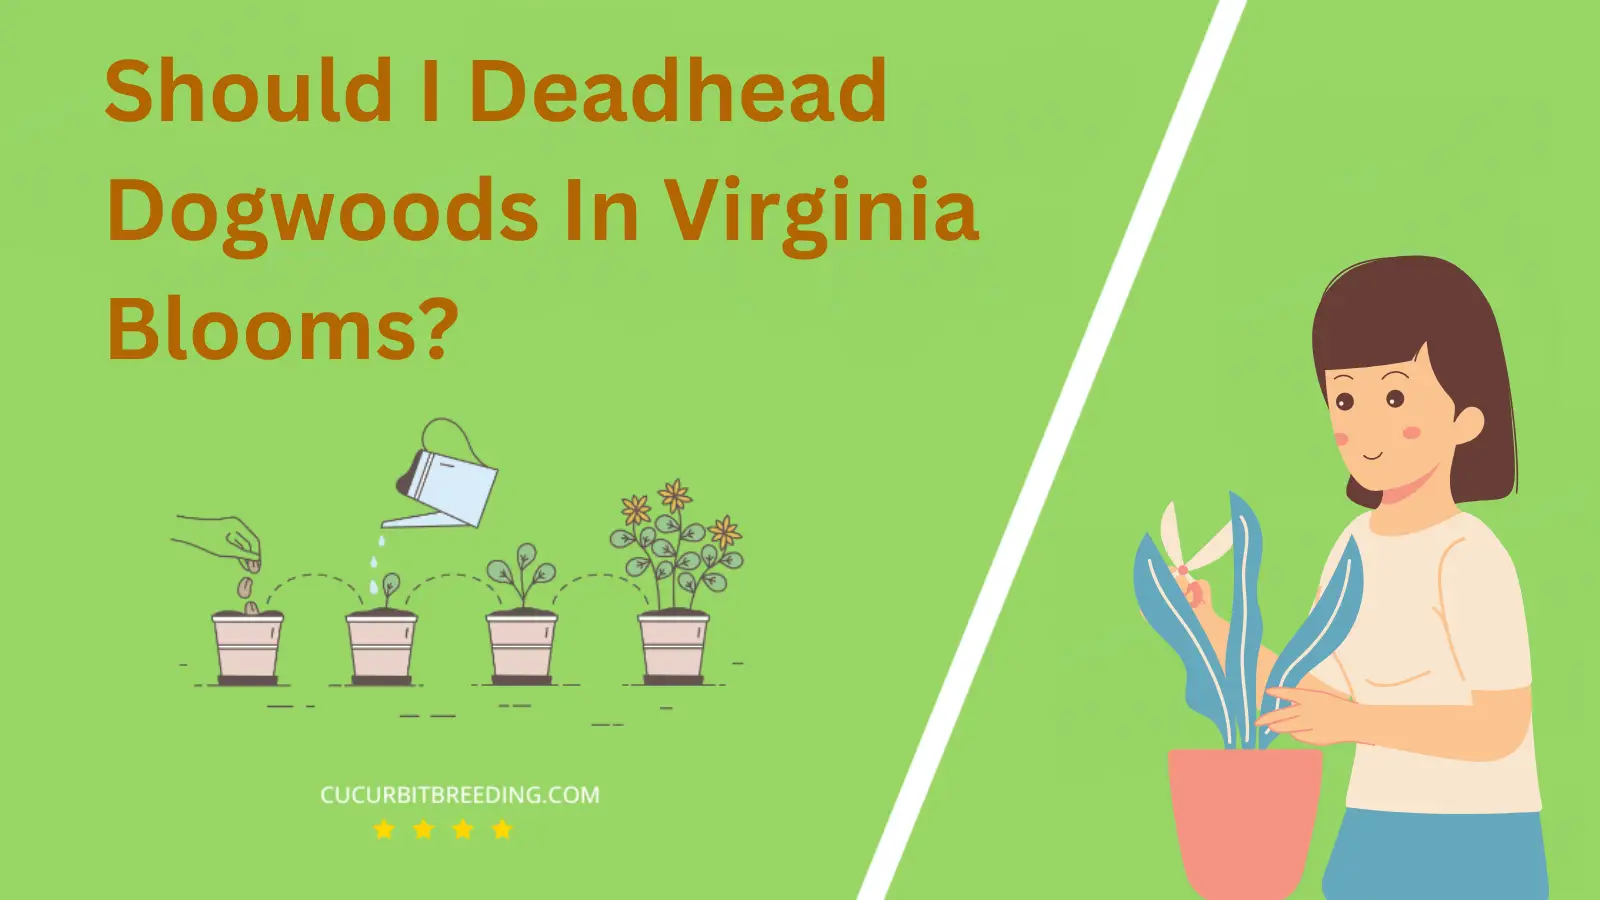 Should I Deadhead Dogwoods In Virginia Blooms?